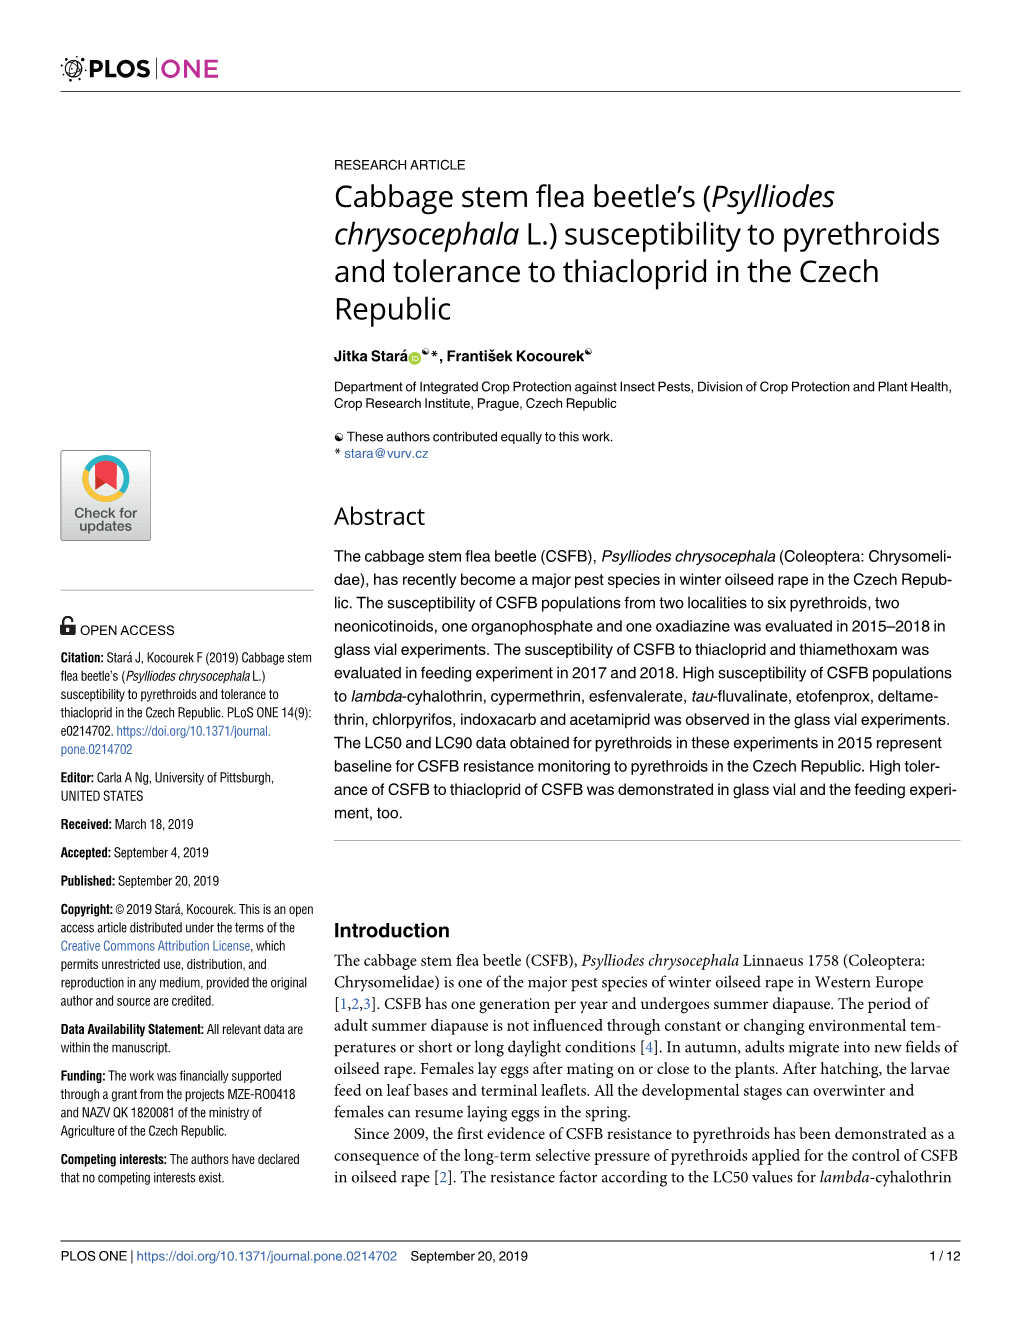 Cabbage Stem Flea Beetle's (Psylliodes Chrysocephala L.) Susceptibility and Tolerance